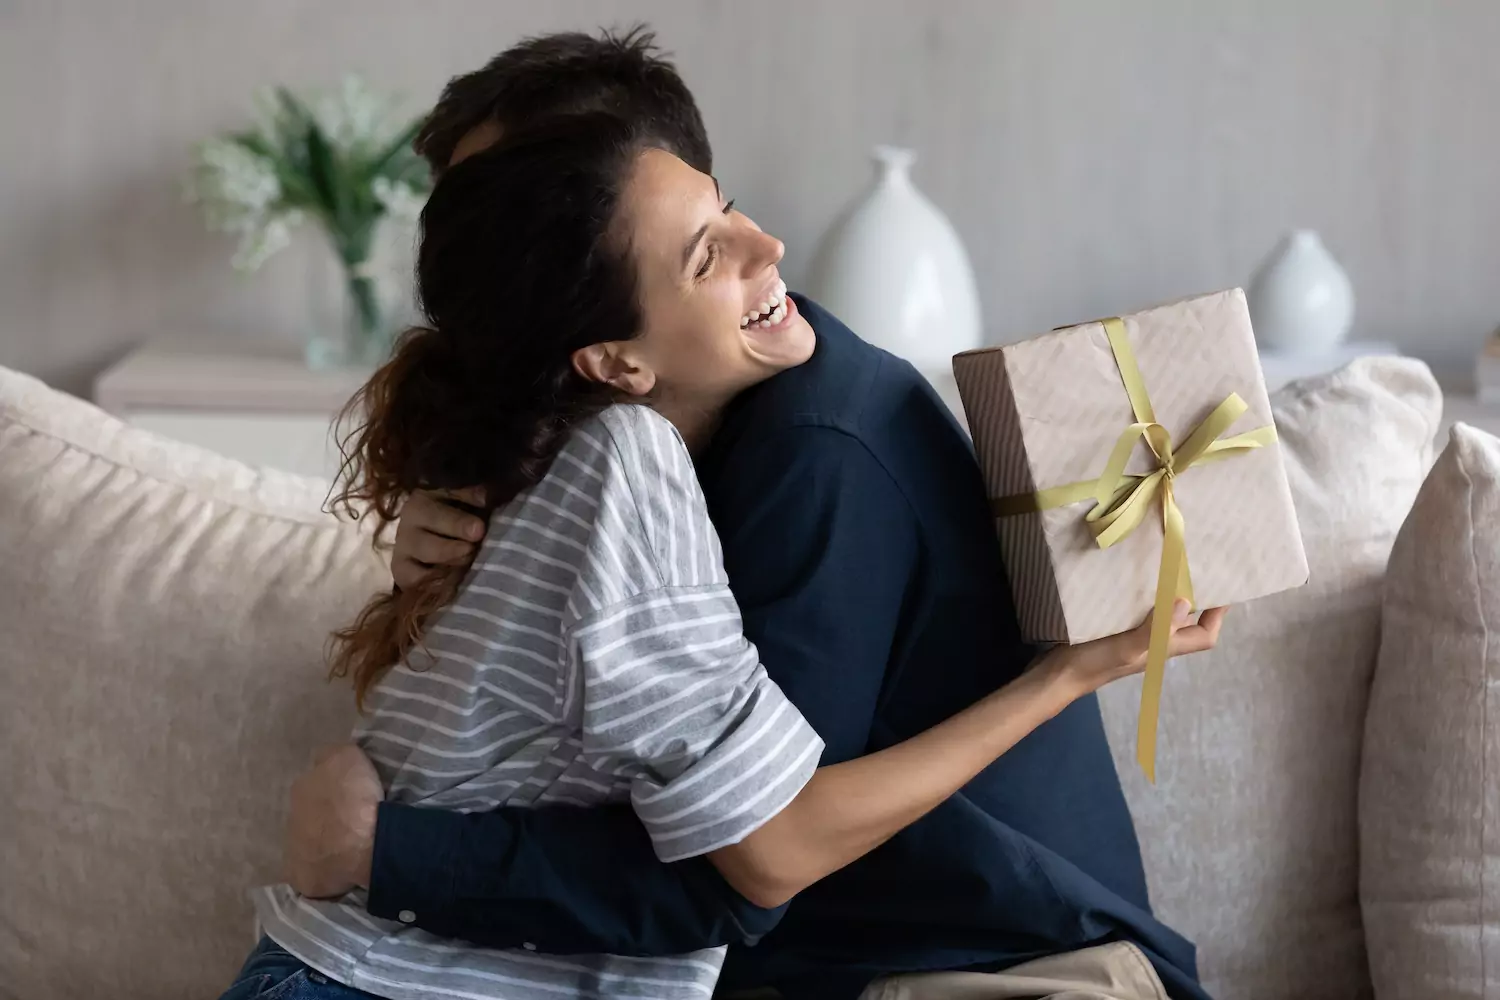 A woman hugs her husband after receiving a gift celebrating an anniversary.